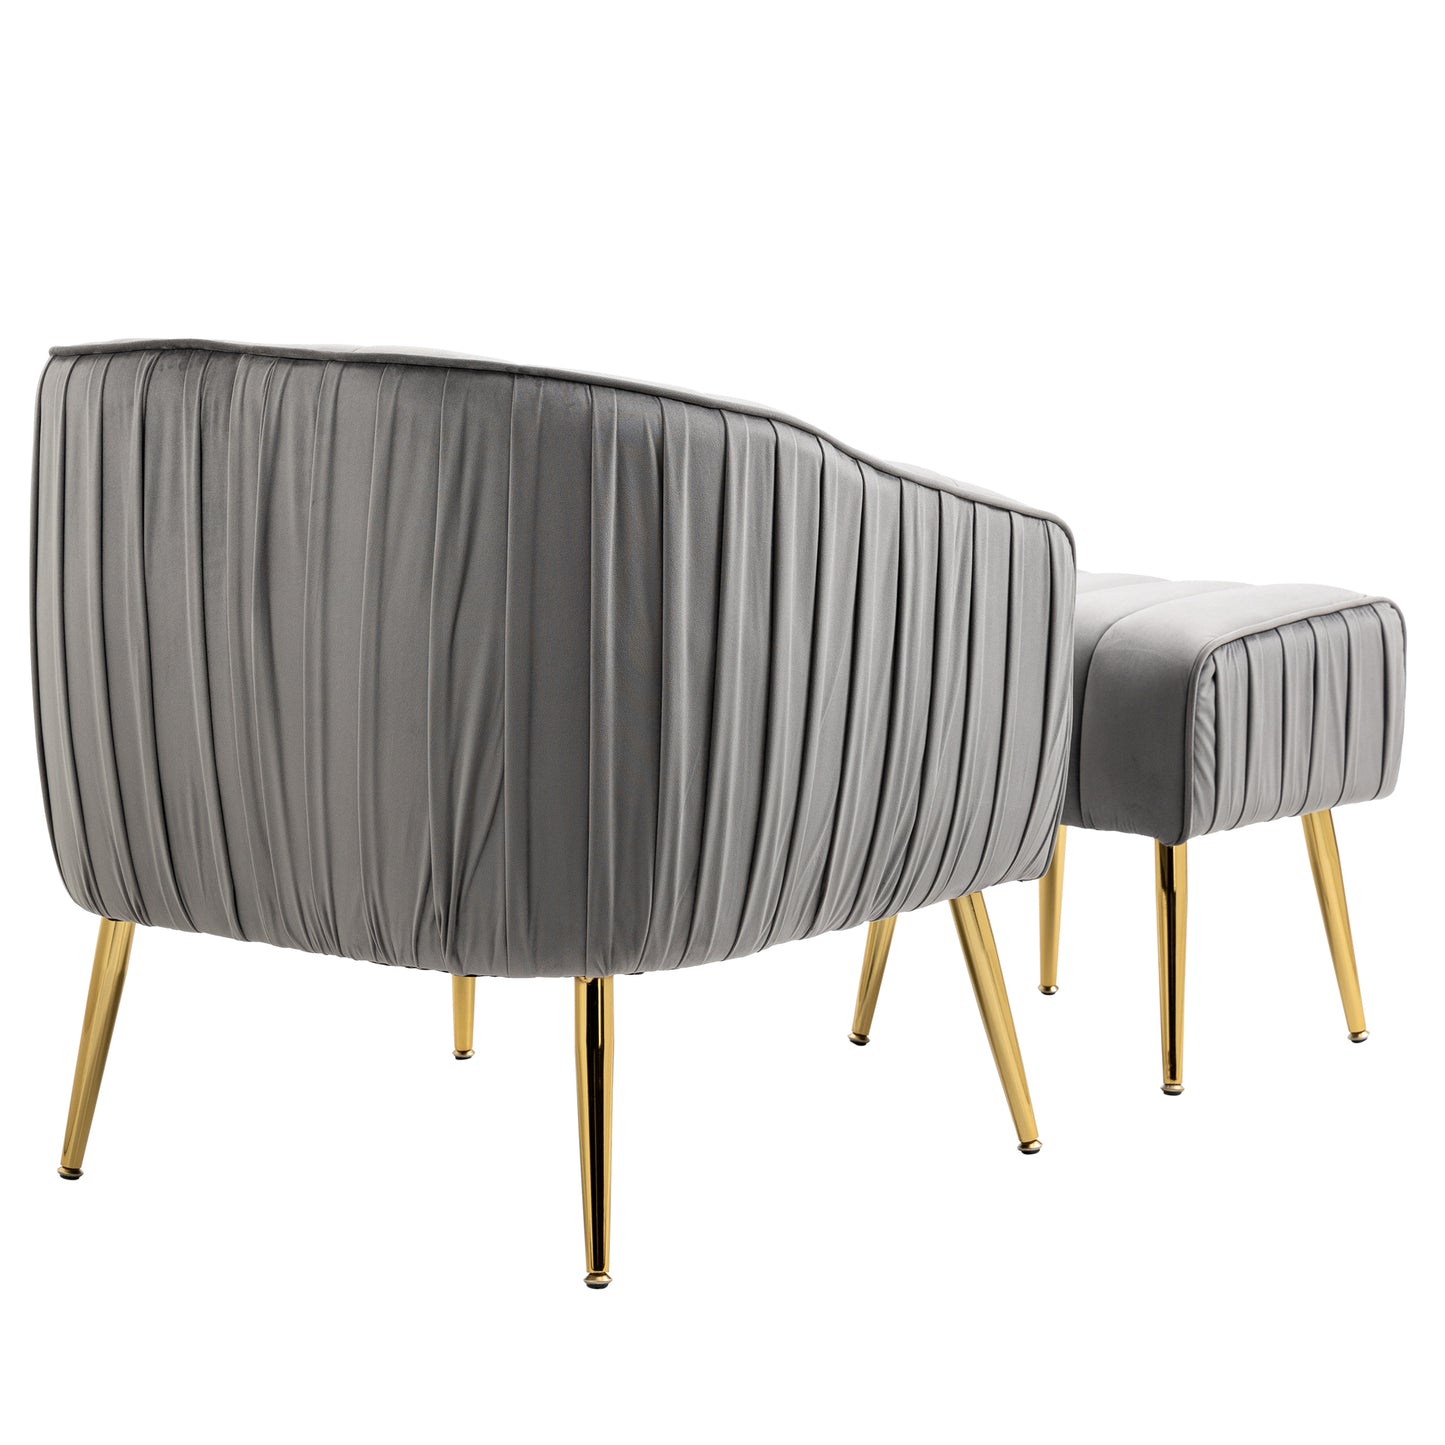 Velvet Accent Chair, Ottoman, Grey